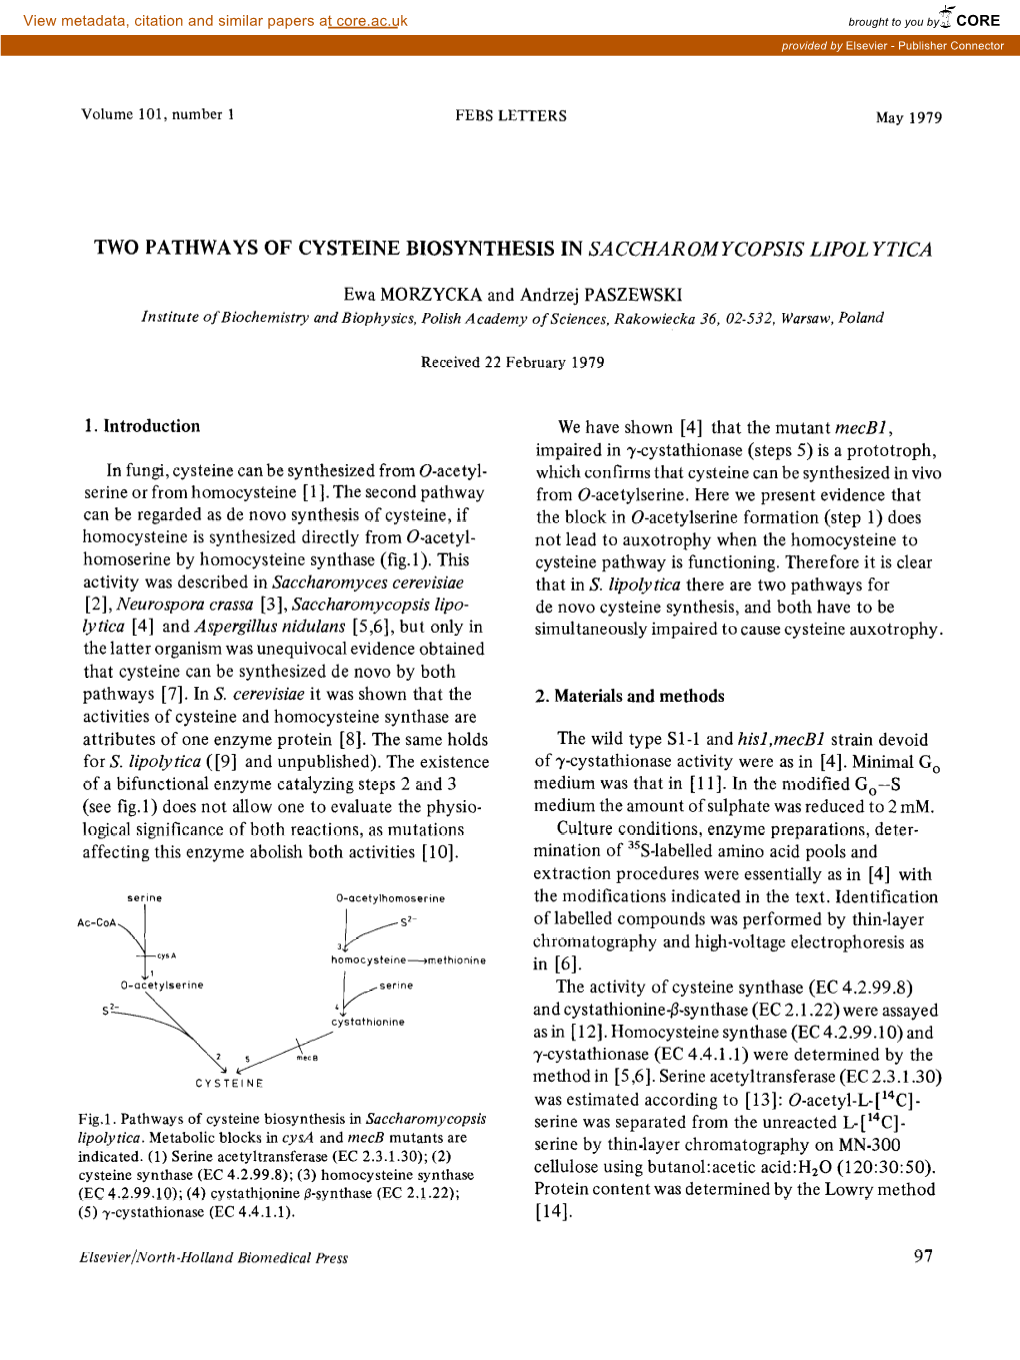 Two Pathways of Cysteine Biosynthesis in Saccharomycopsis Lipol Ytica